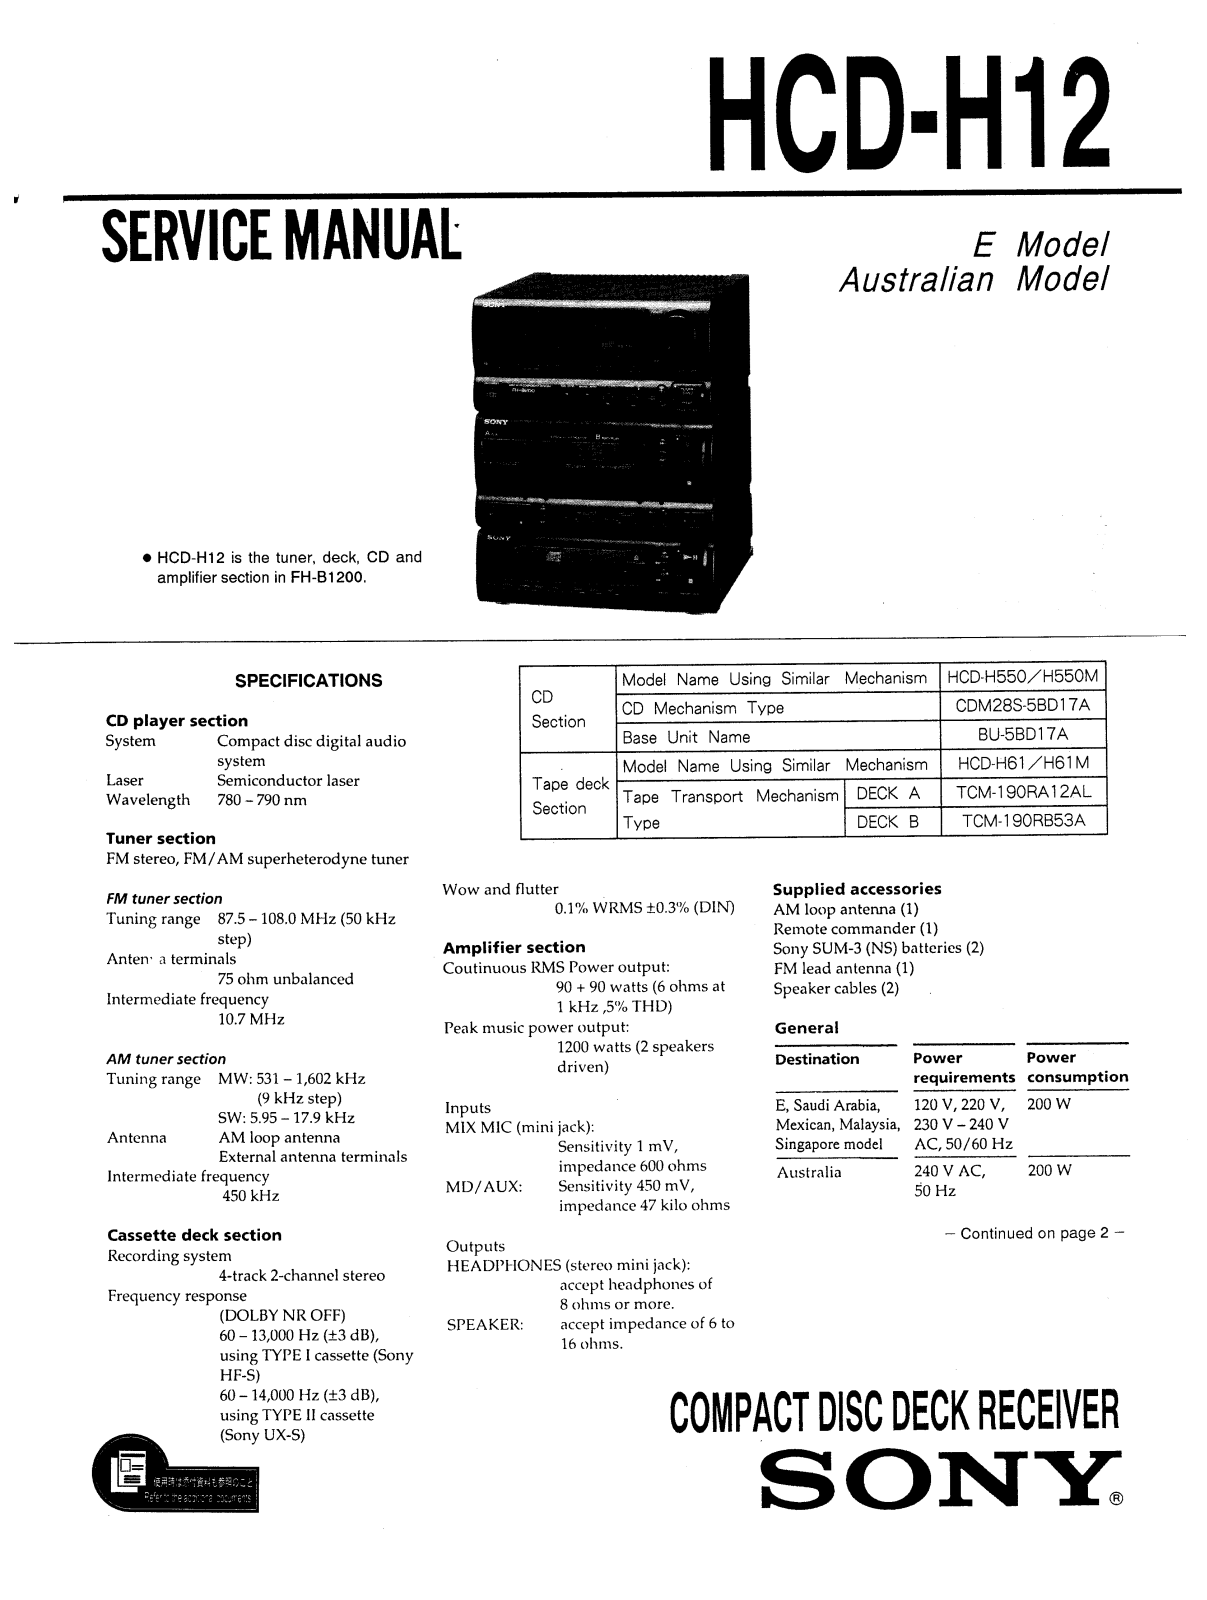 SONY HCD H12 Service Manual